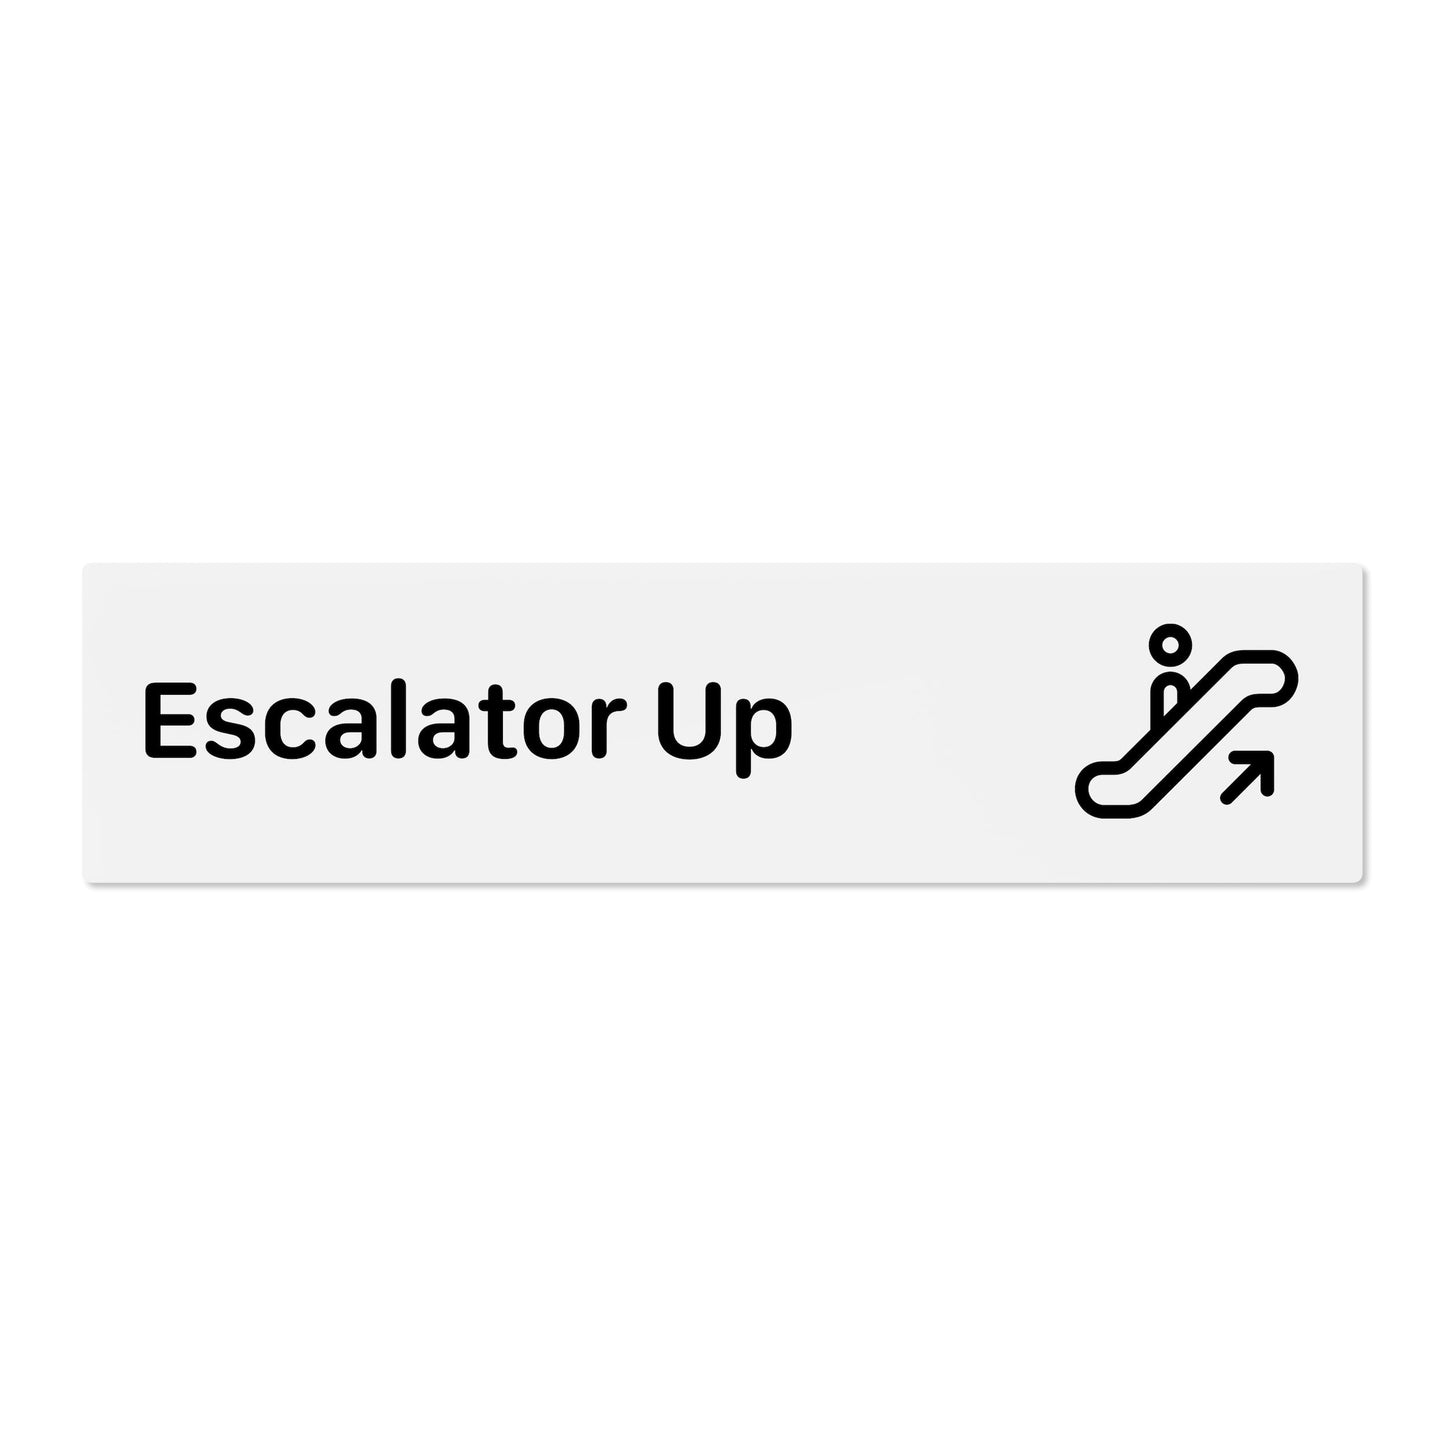 Escalator Up